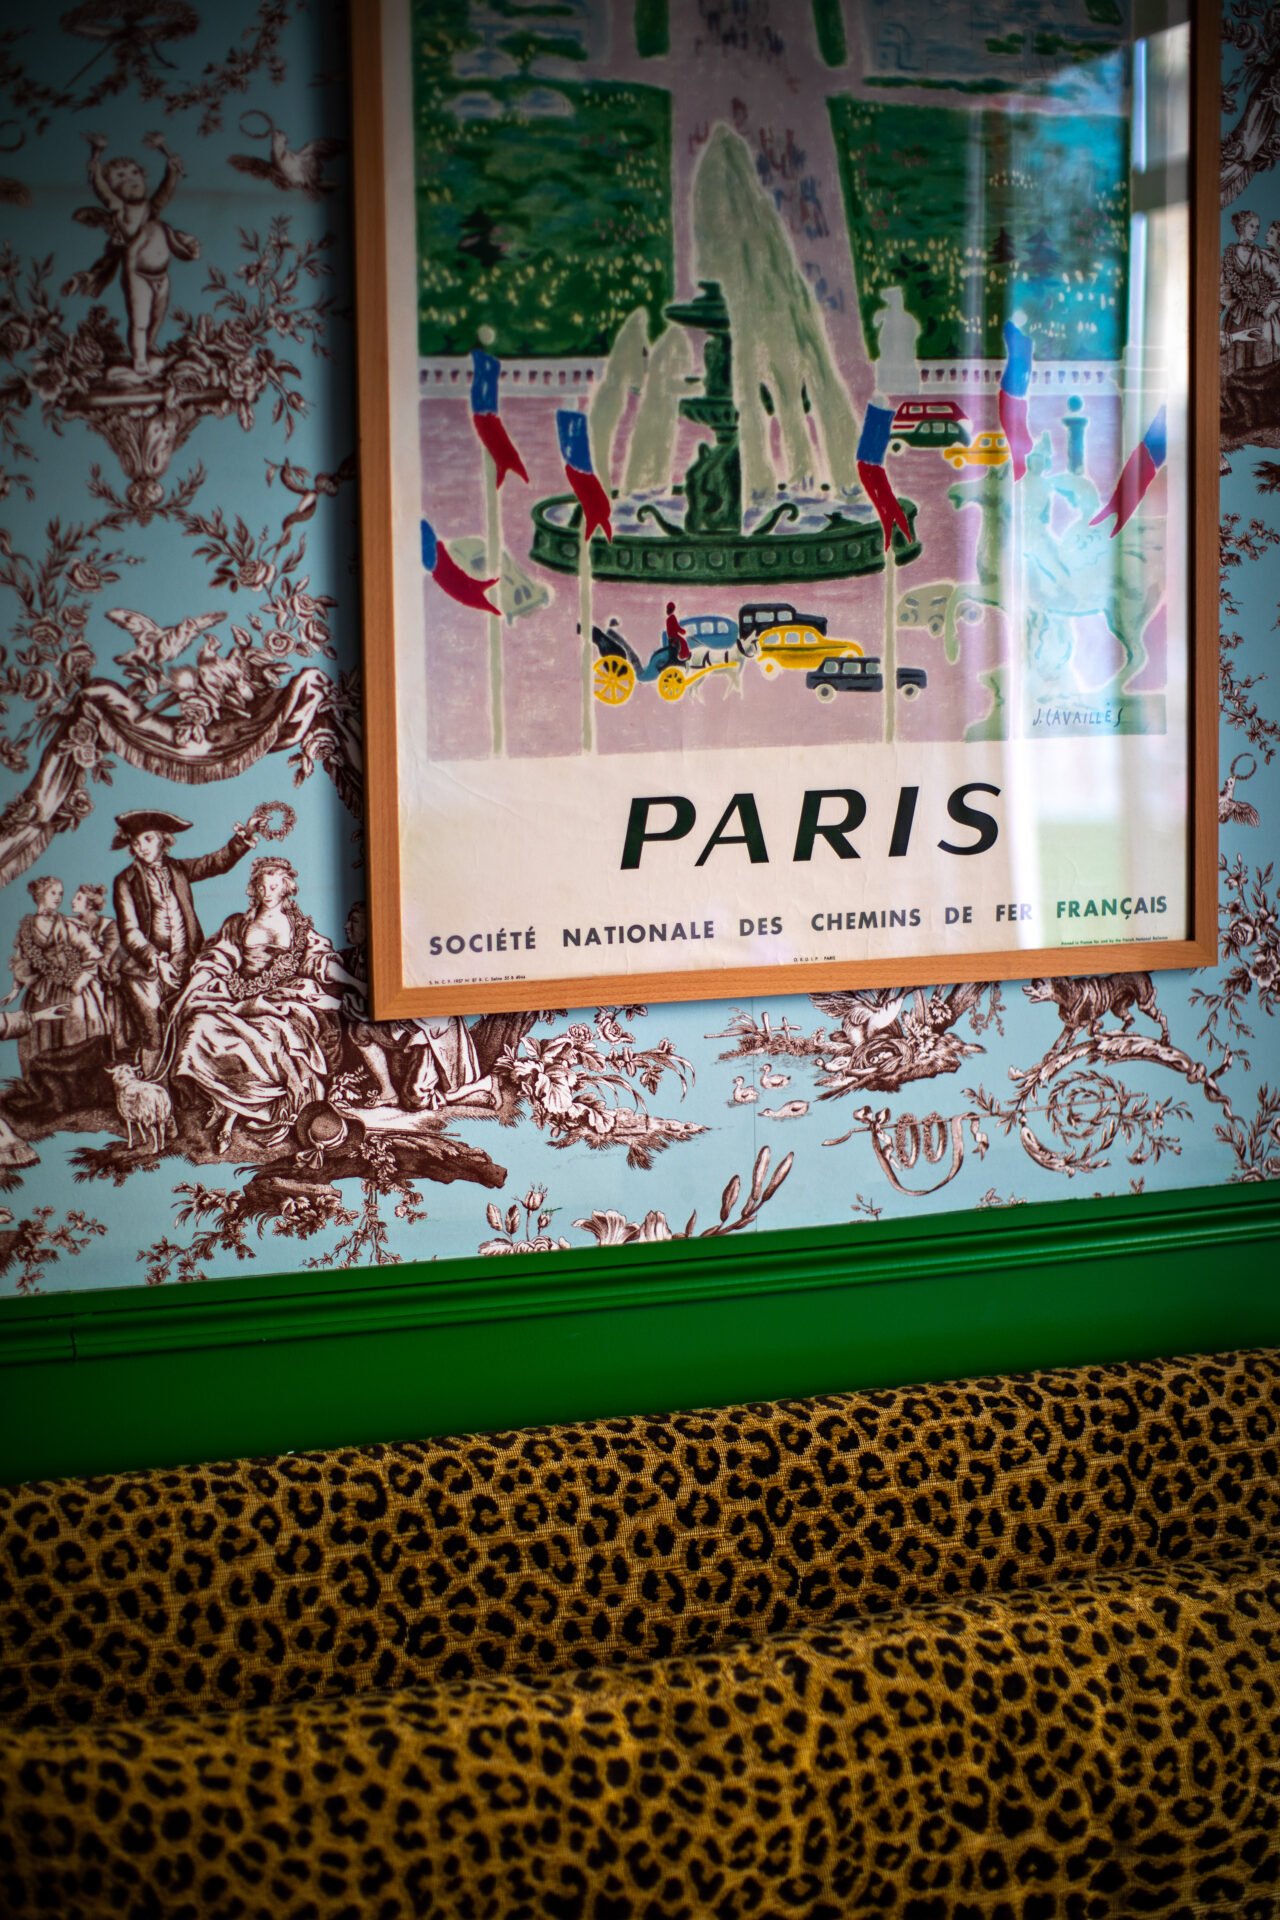 patterned wallpaper, leopard print and a vintage paris poster